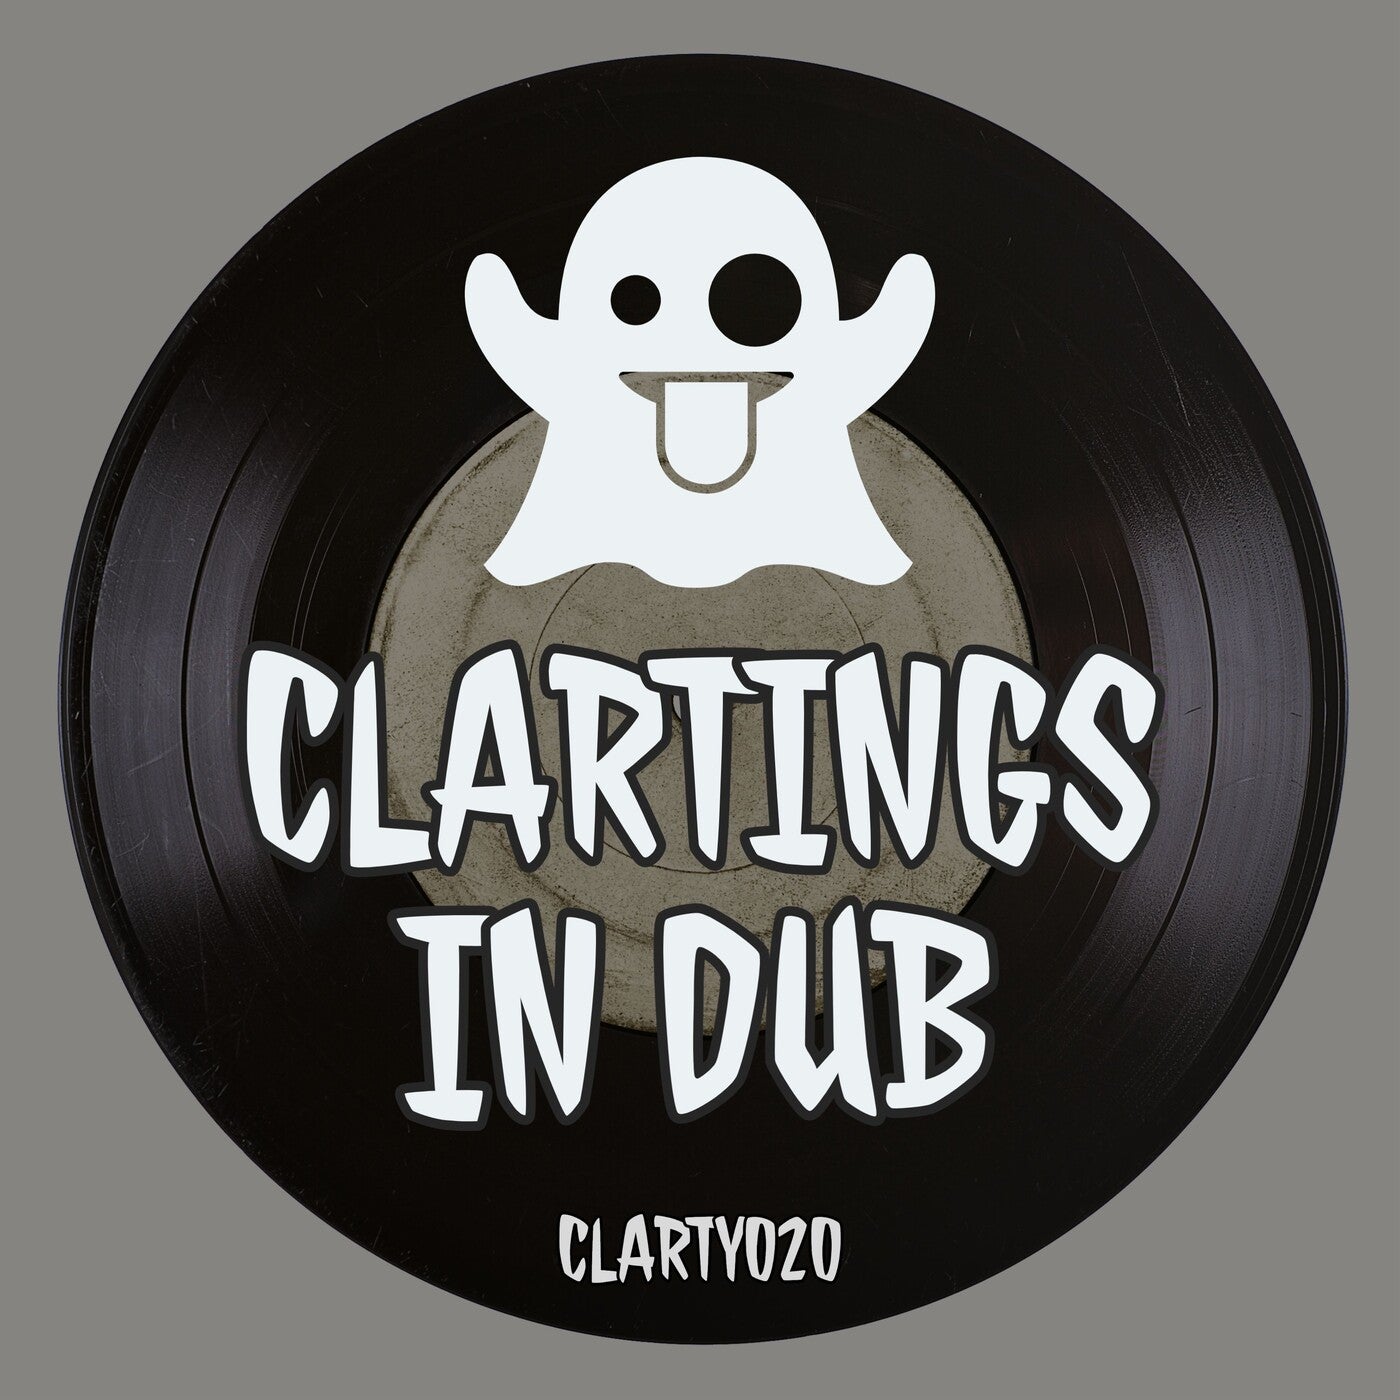 Clartings in Dub